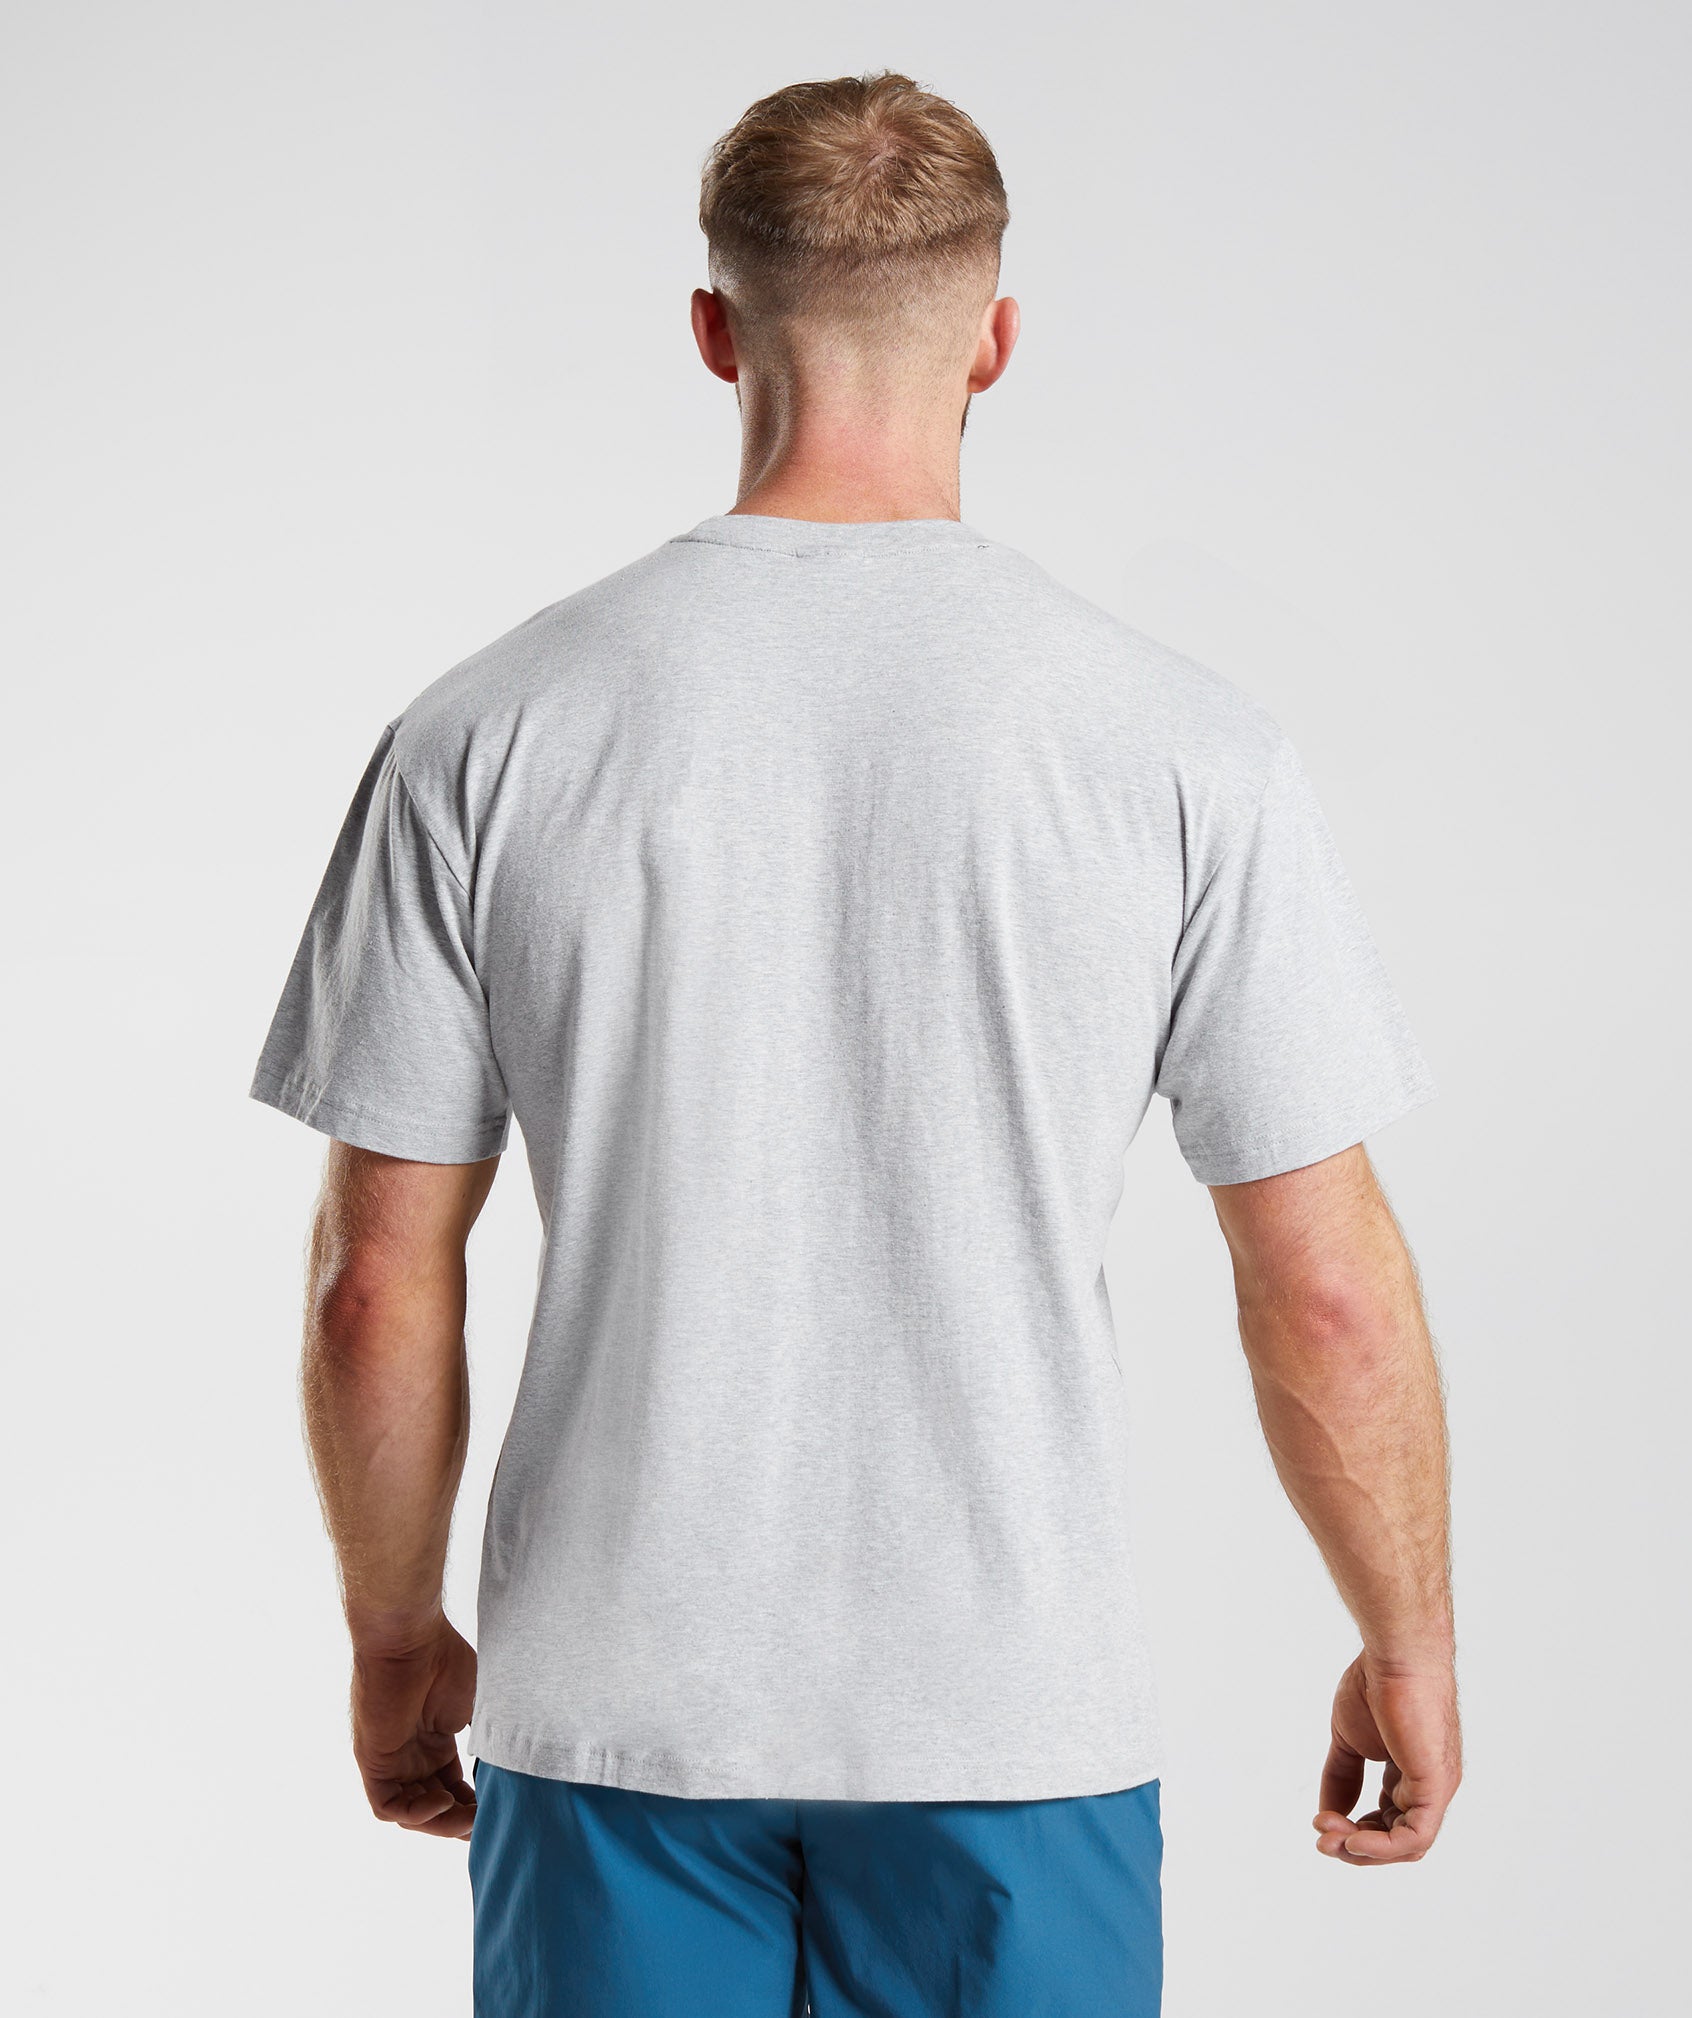 Gymshark Apollo Oversized T-Shirt - Light Grey Marl